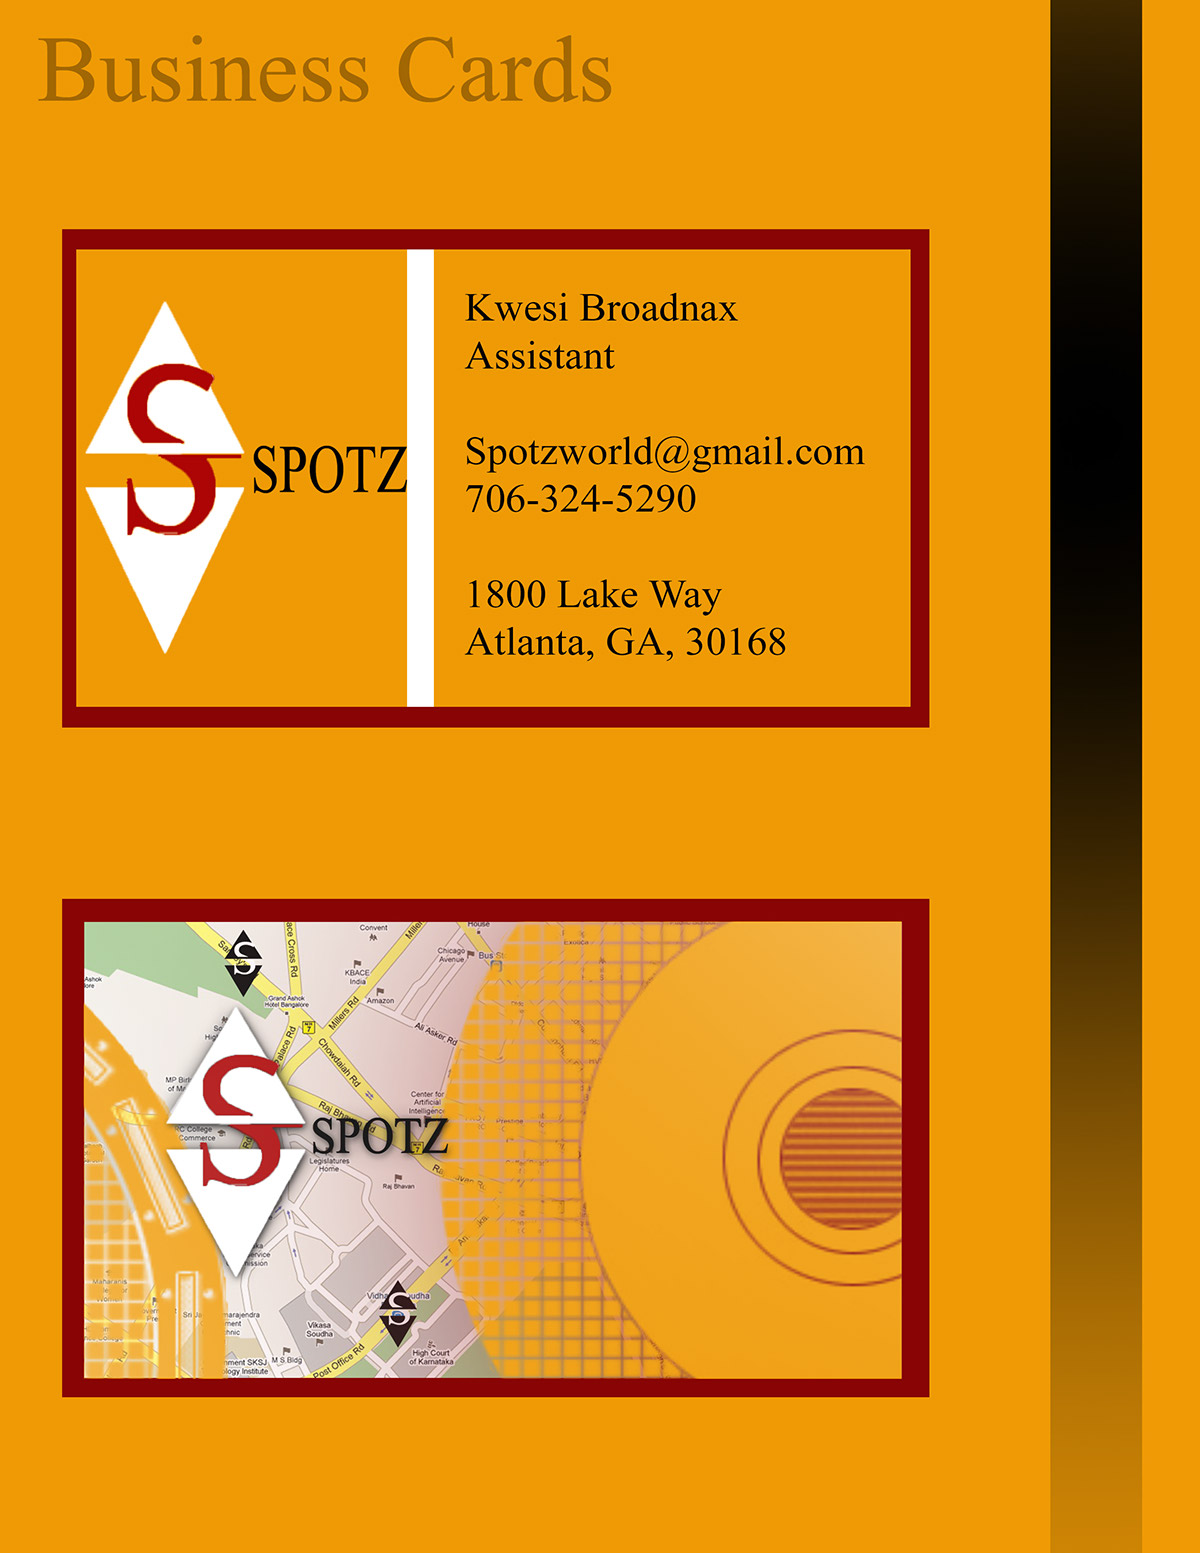 Full Sail GRDBS pcr August2016 Kwesi Broadnax Spotz Mobile App